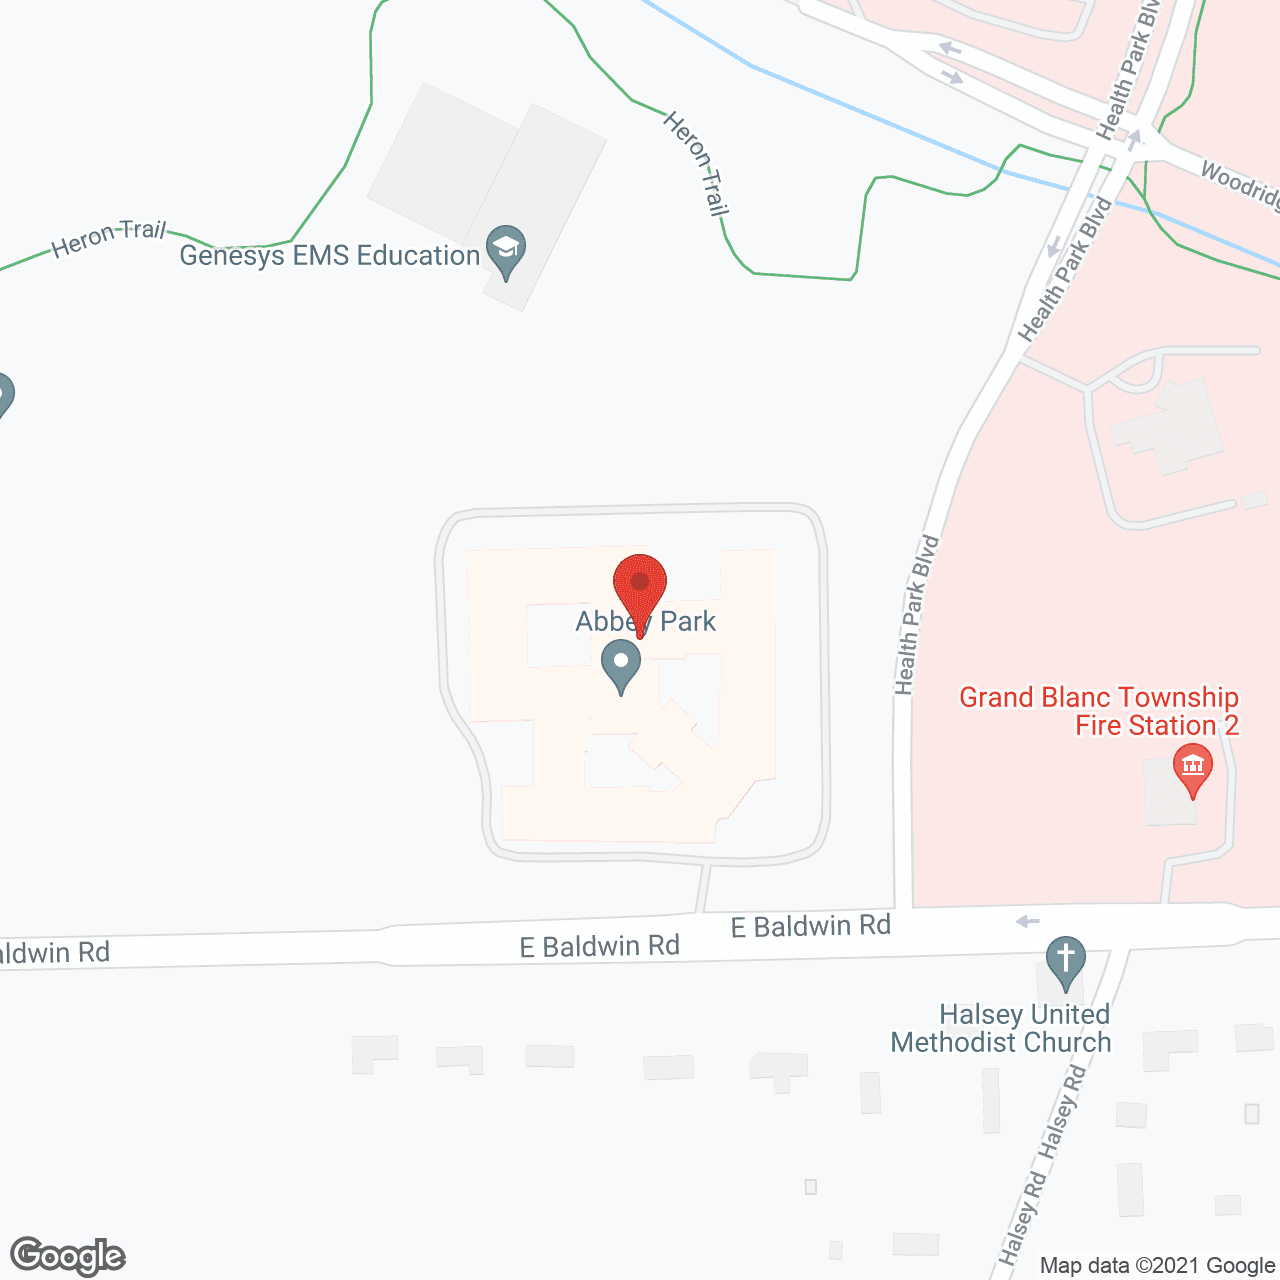 Abbey Park in google map